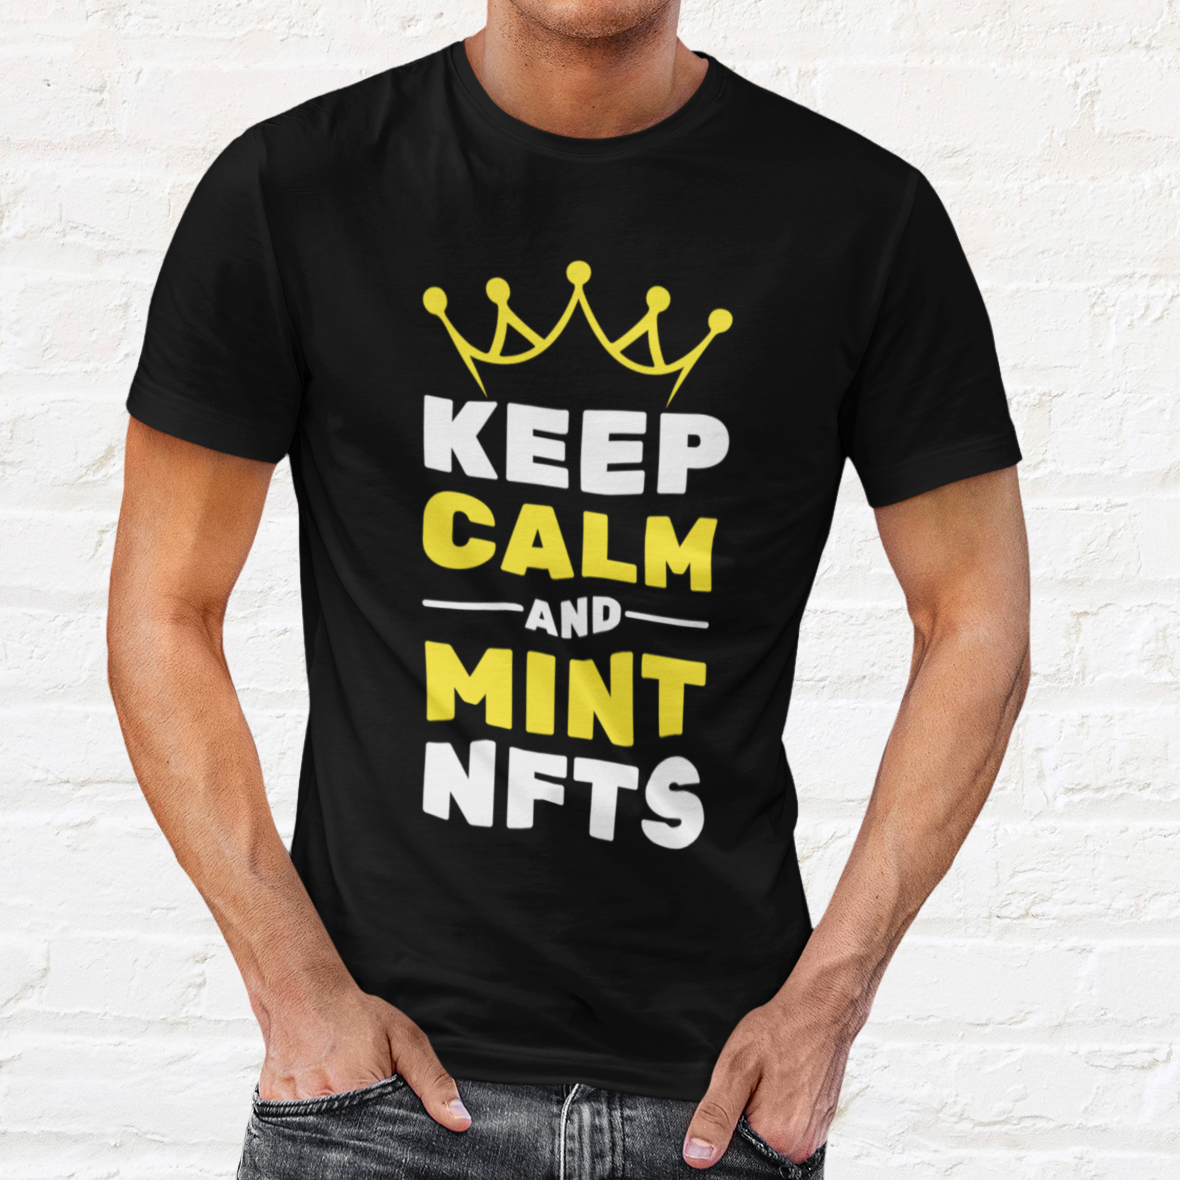 Keep Calm And Mint NFTs T-Shirt